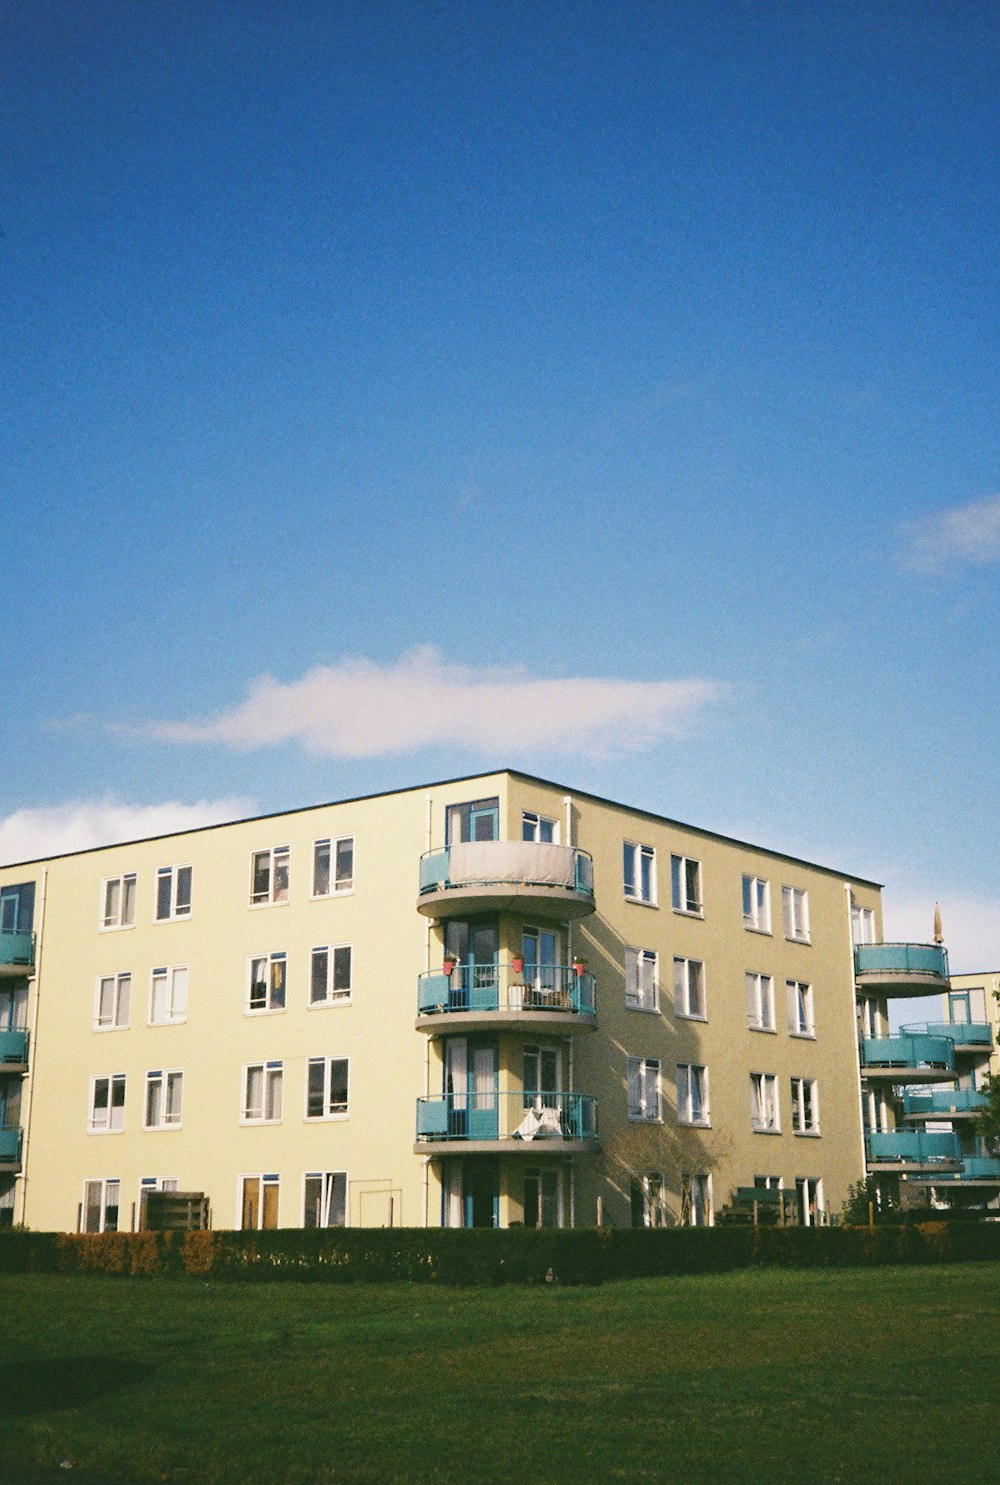 beige concrete building under blue sky during daytime